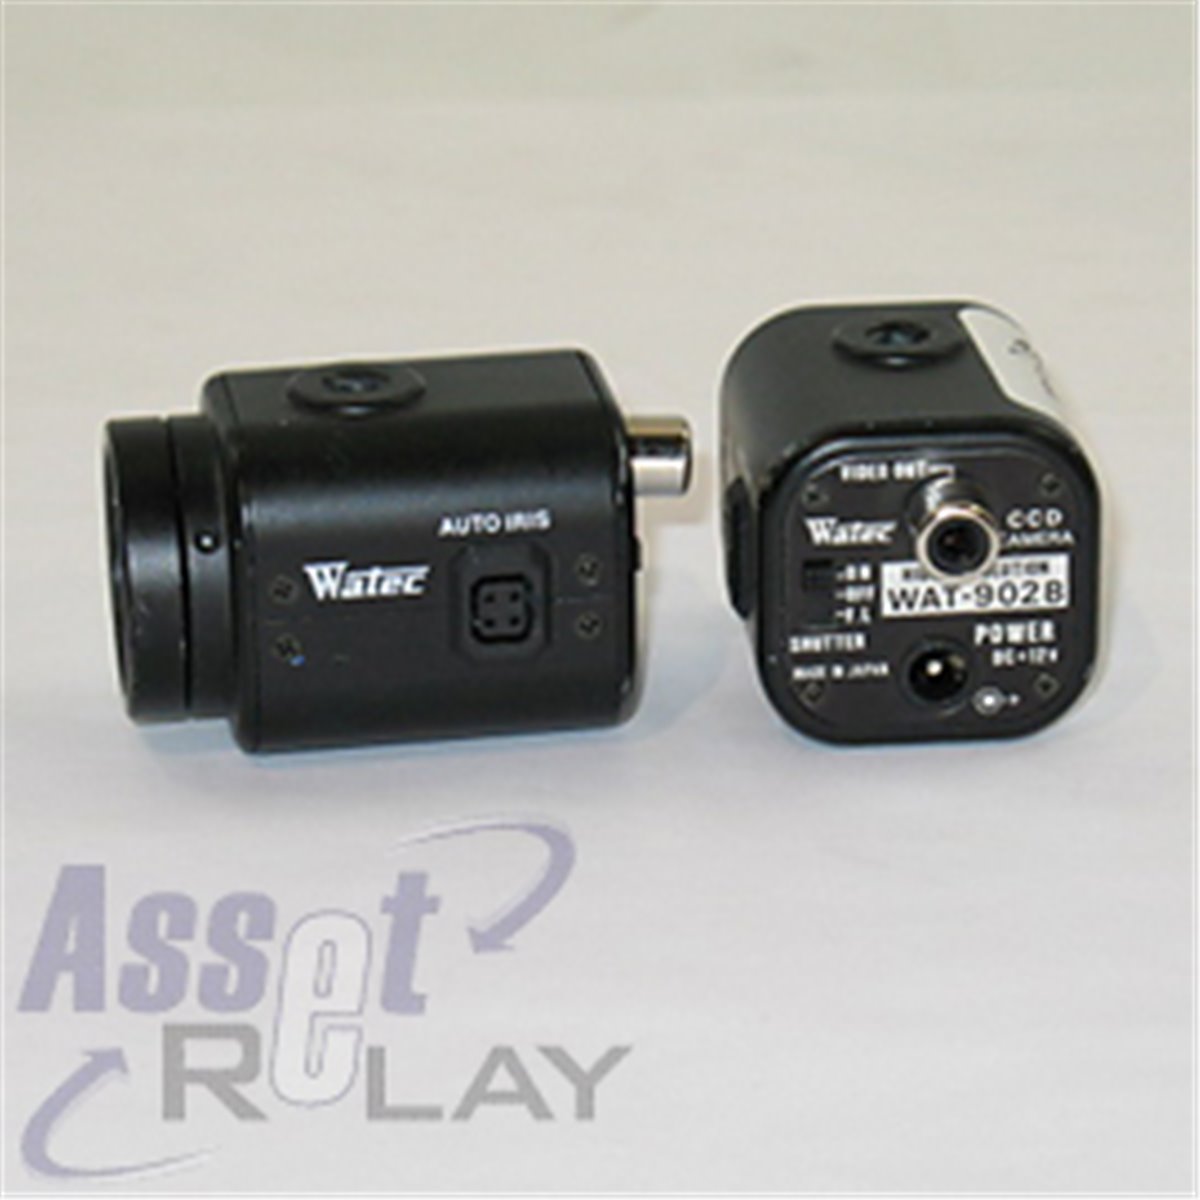 Watec Wat-902b High Resolution Camera for Microscope WAT902B for sale online 